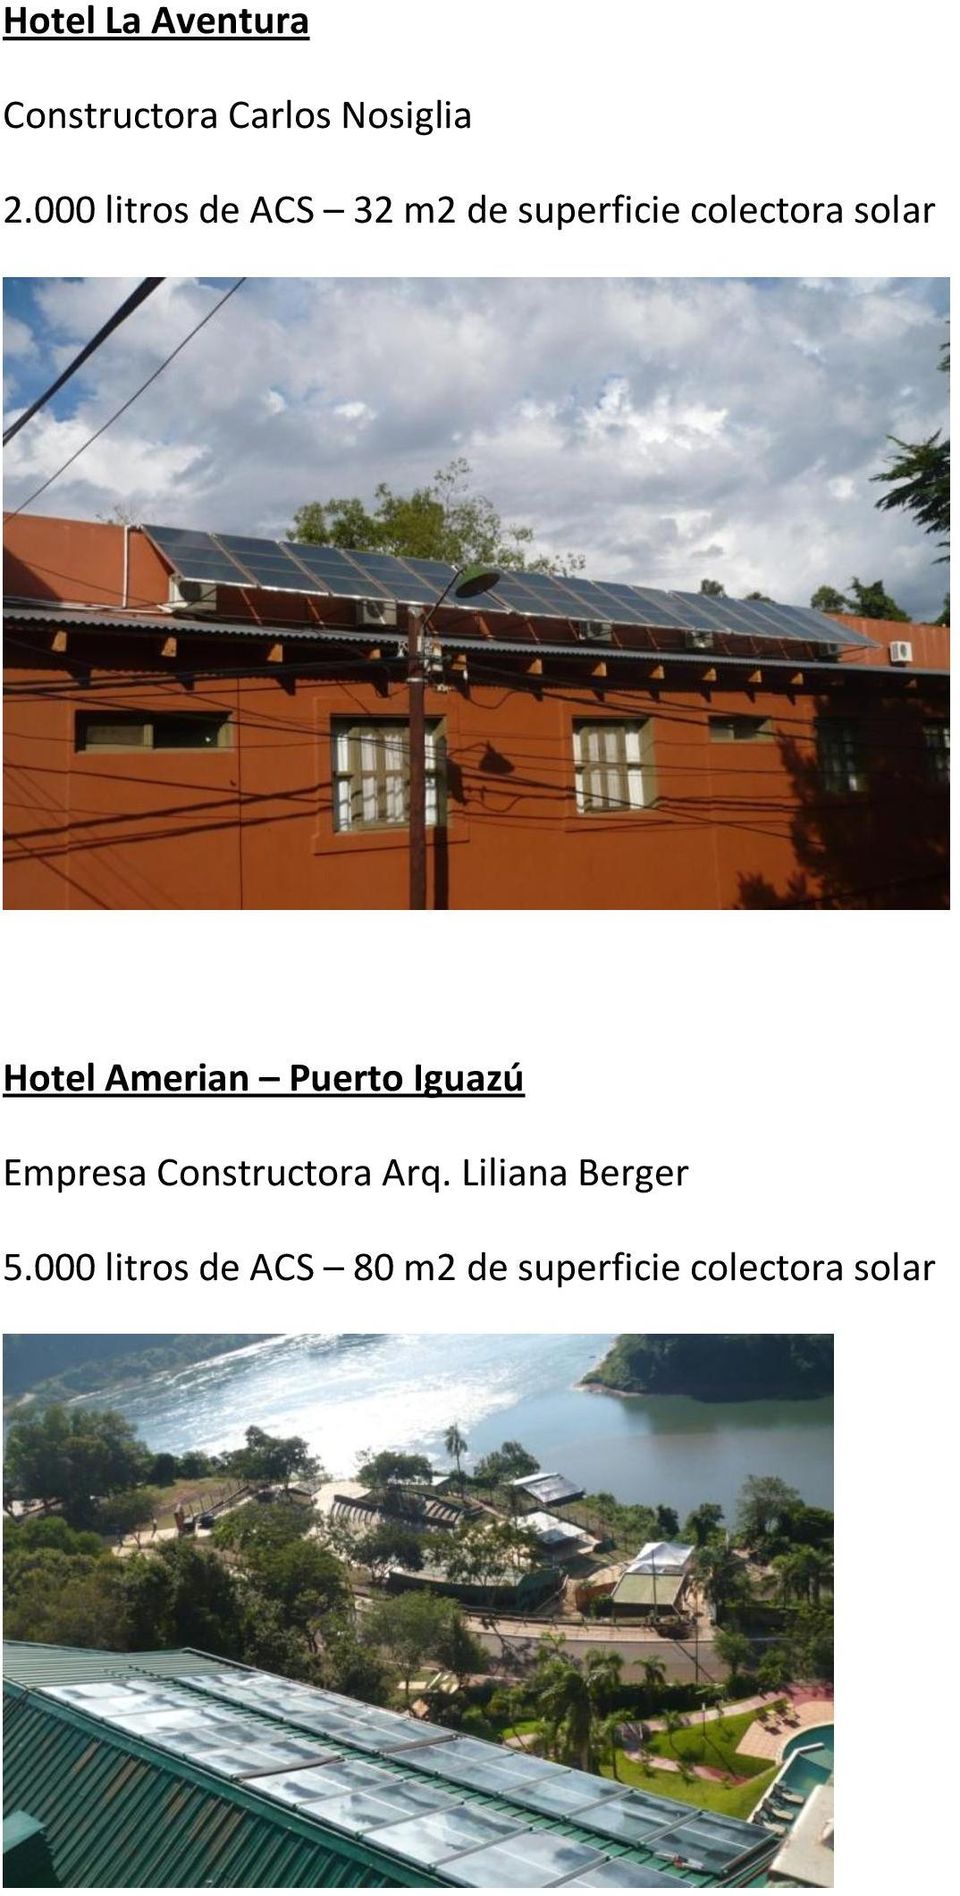 Hotel Amerian Puerto Iguazú Empresa Constructora Arq.